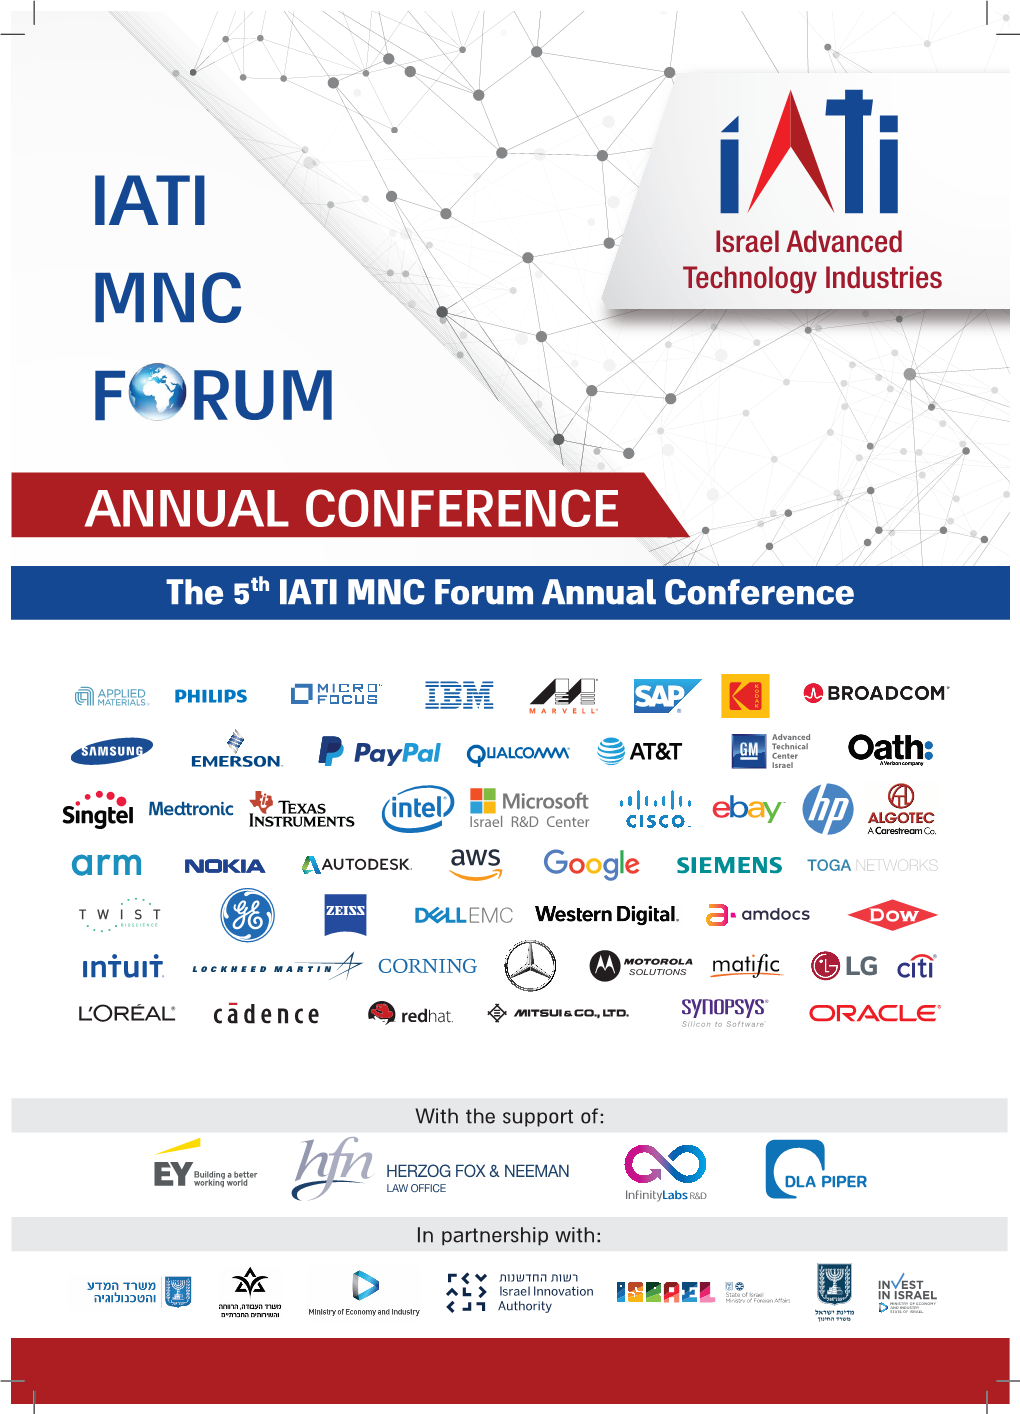 The 5Th IATI MNC Forum Annual Conference